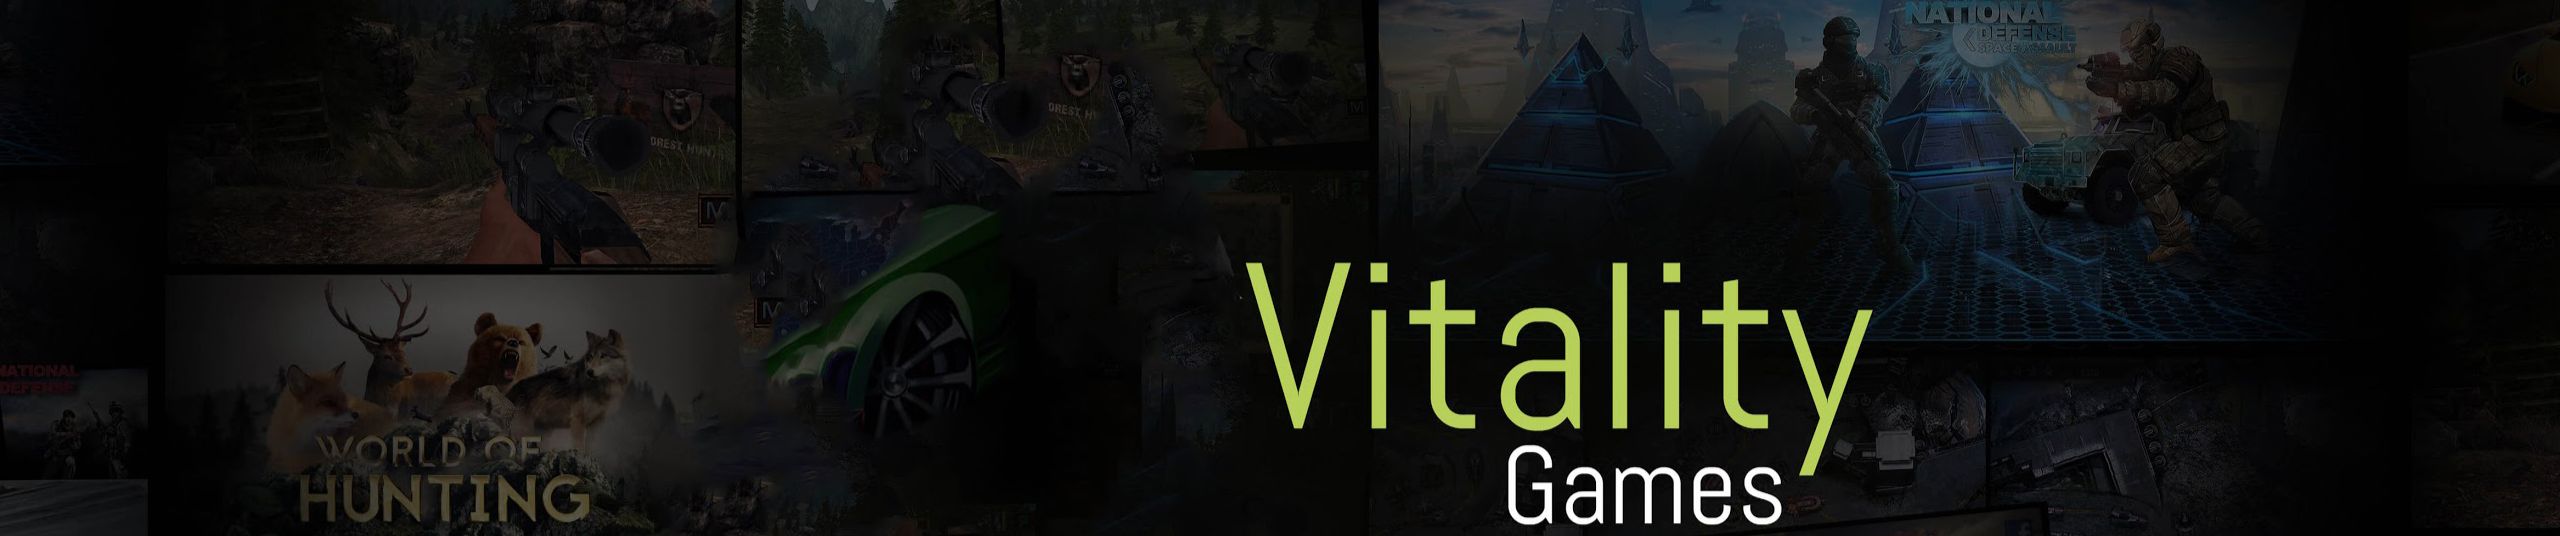 VitalityGames.com